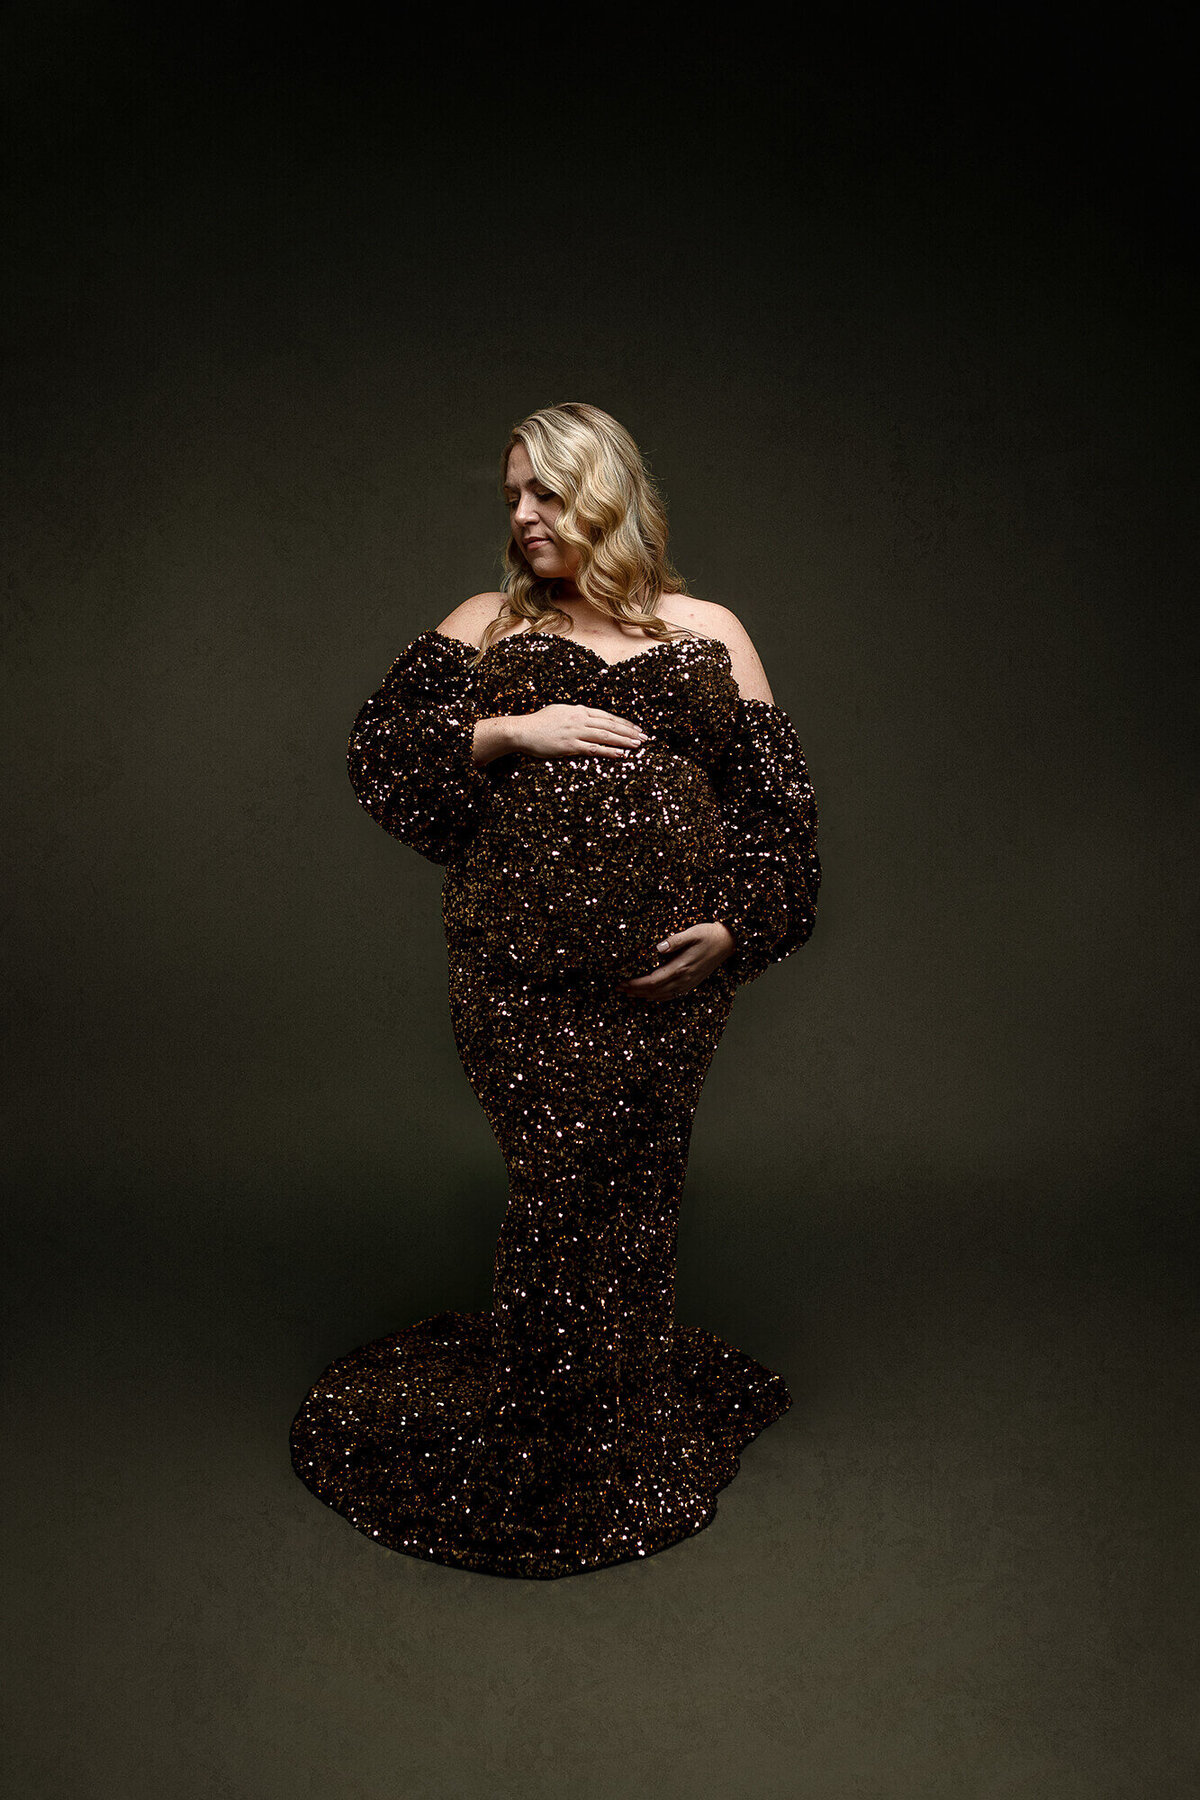 Studio maternity photoshoot in Southern Minnesota.